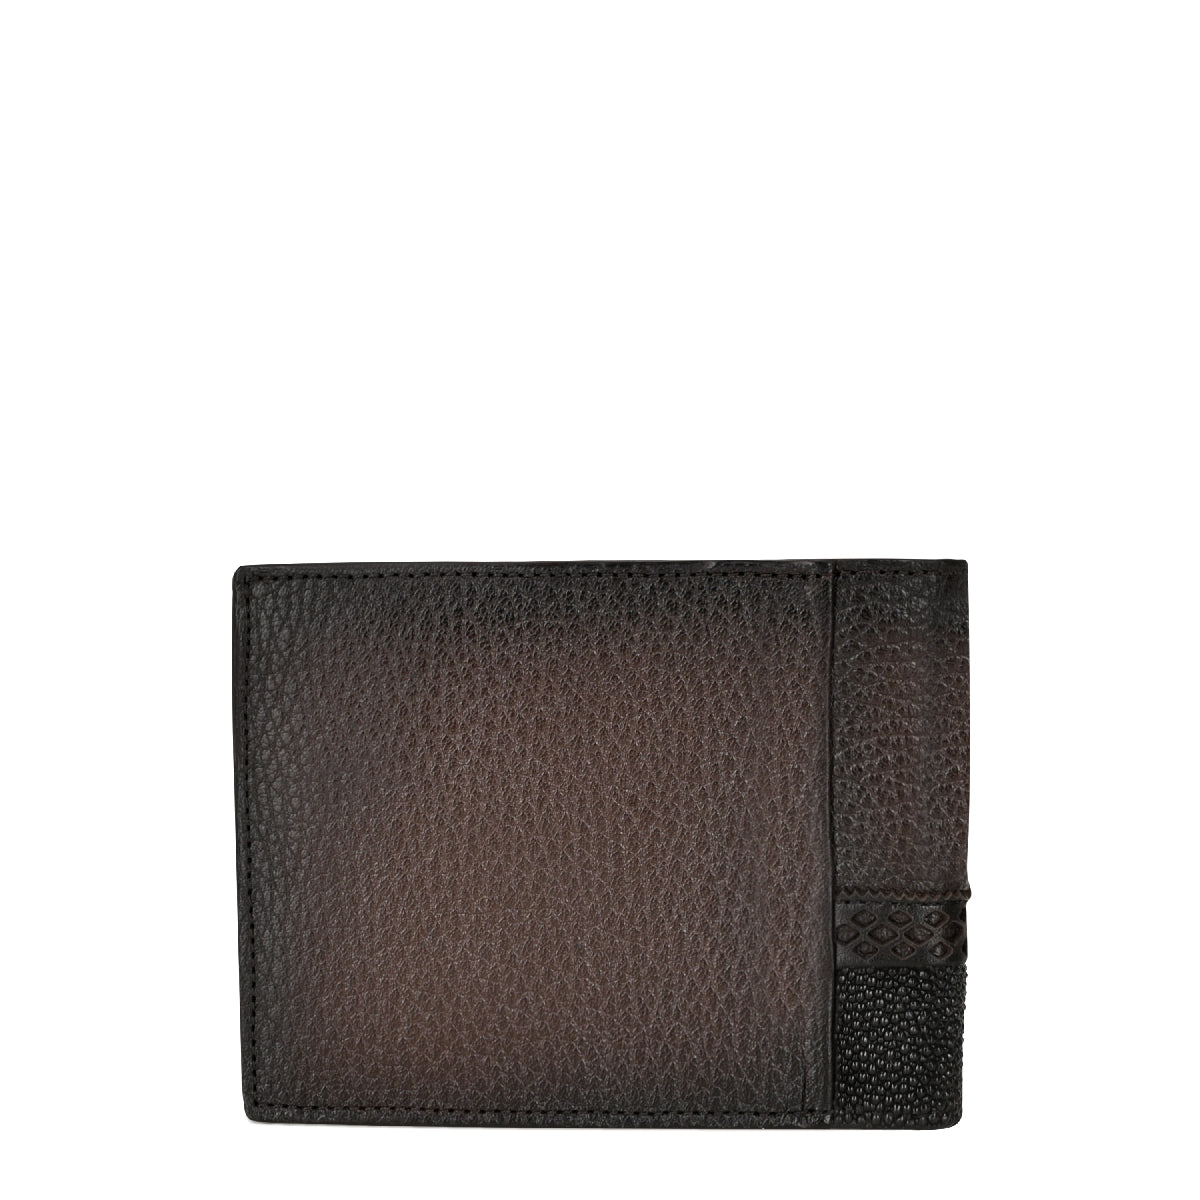 Handmade bi-tone leather wallet 4